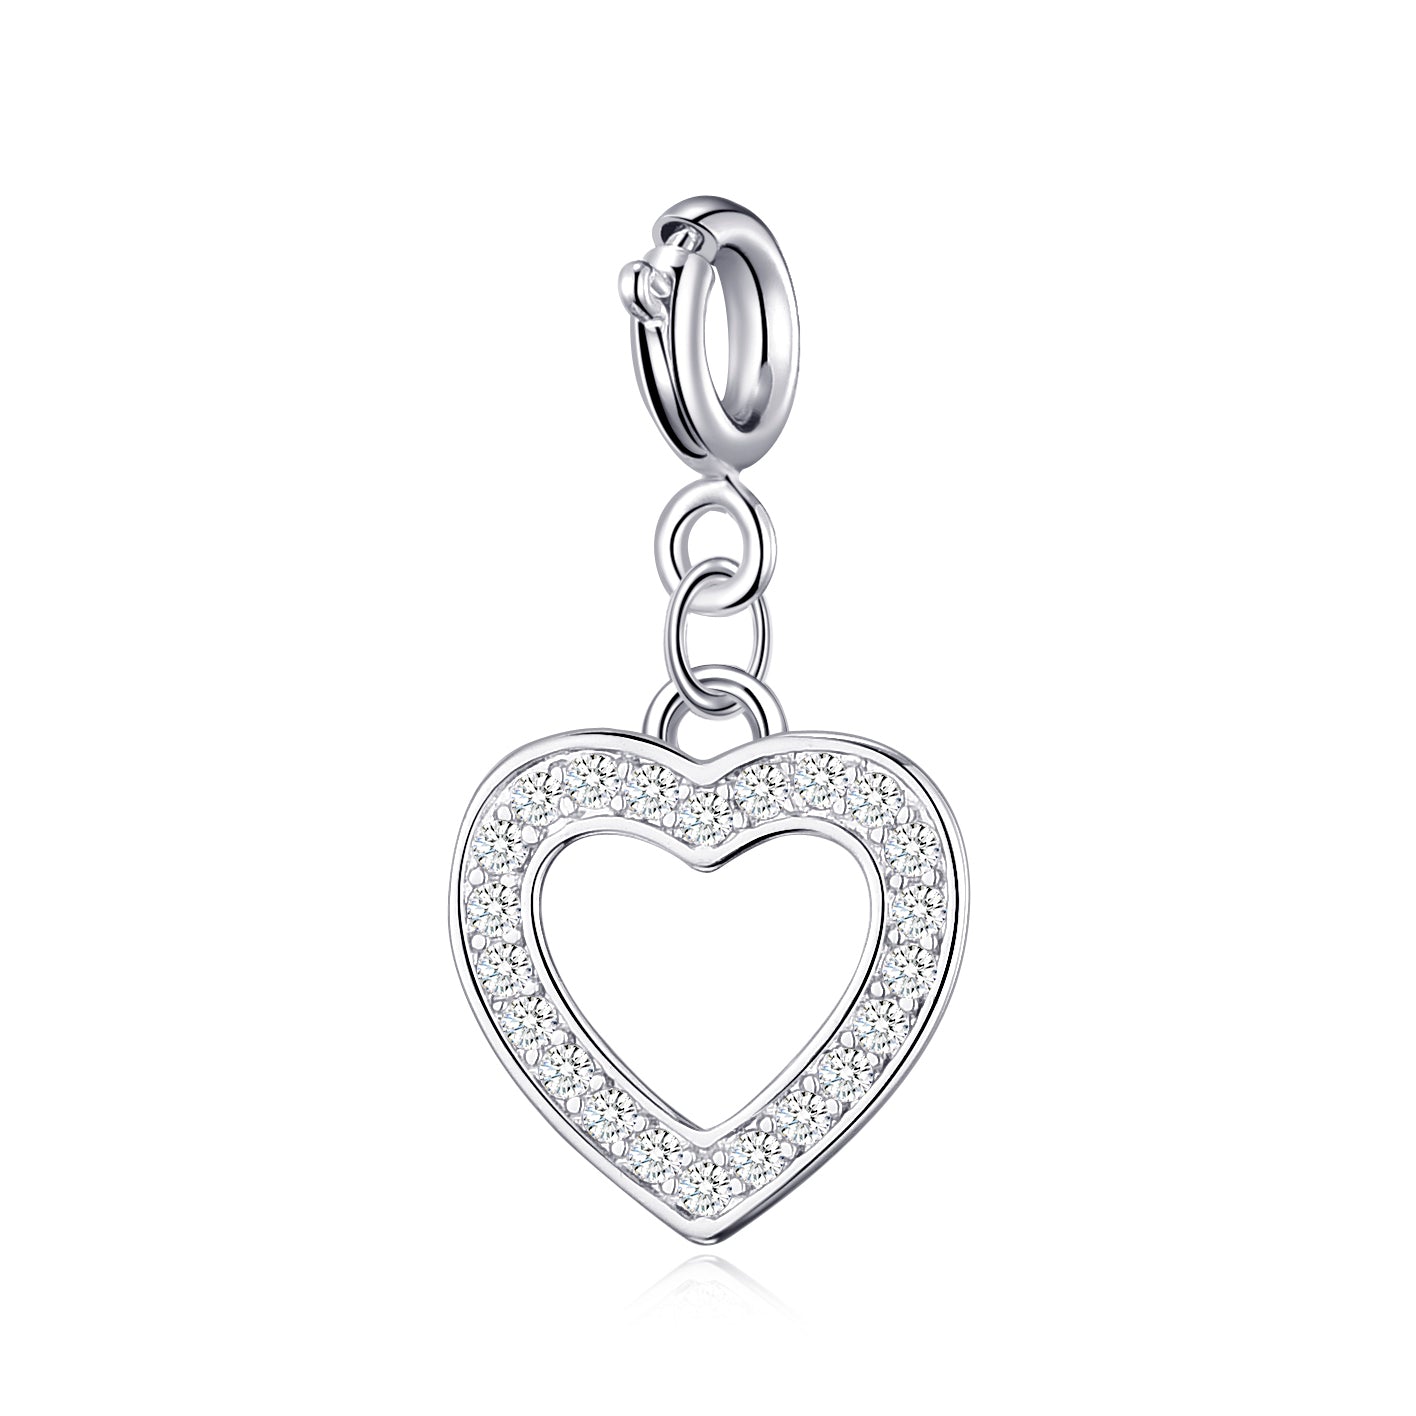 Open Heart Charm Created with Zircondia® Crystals by Philip Jones Jewellery